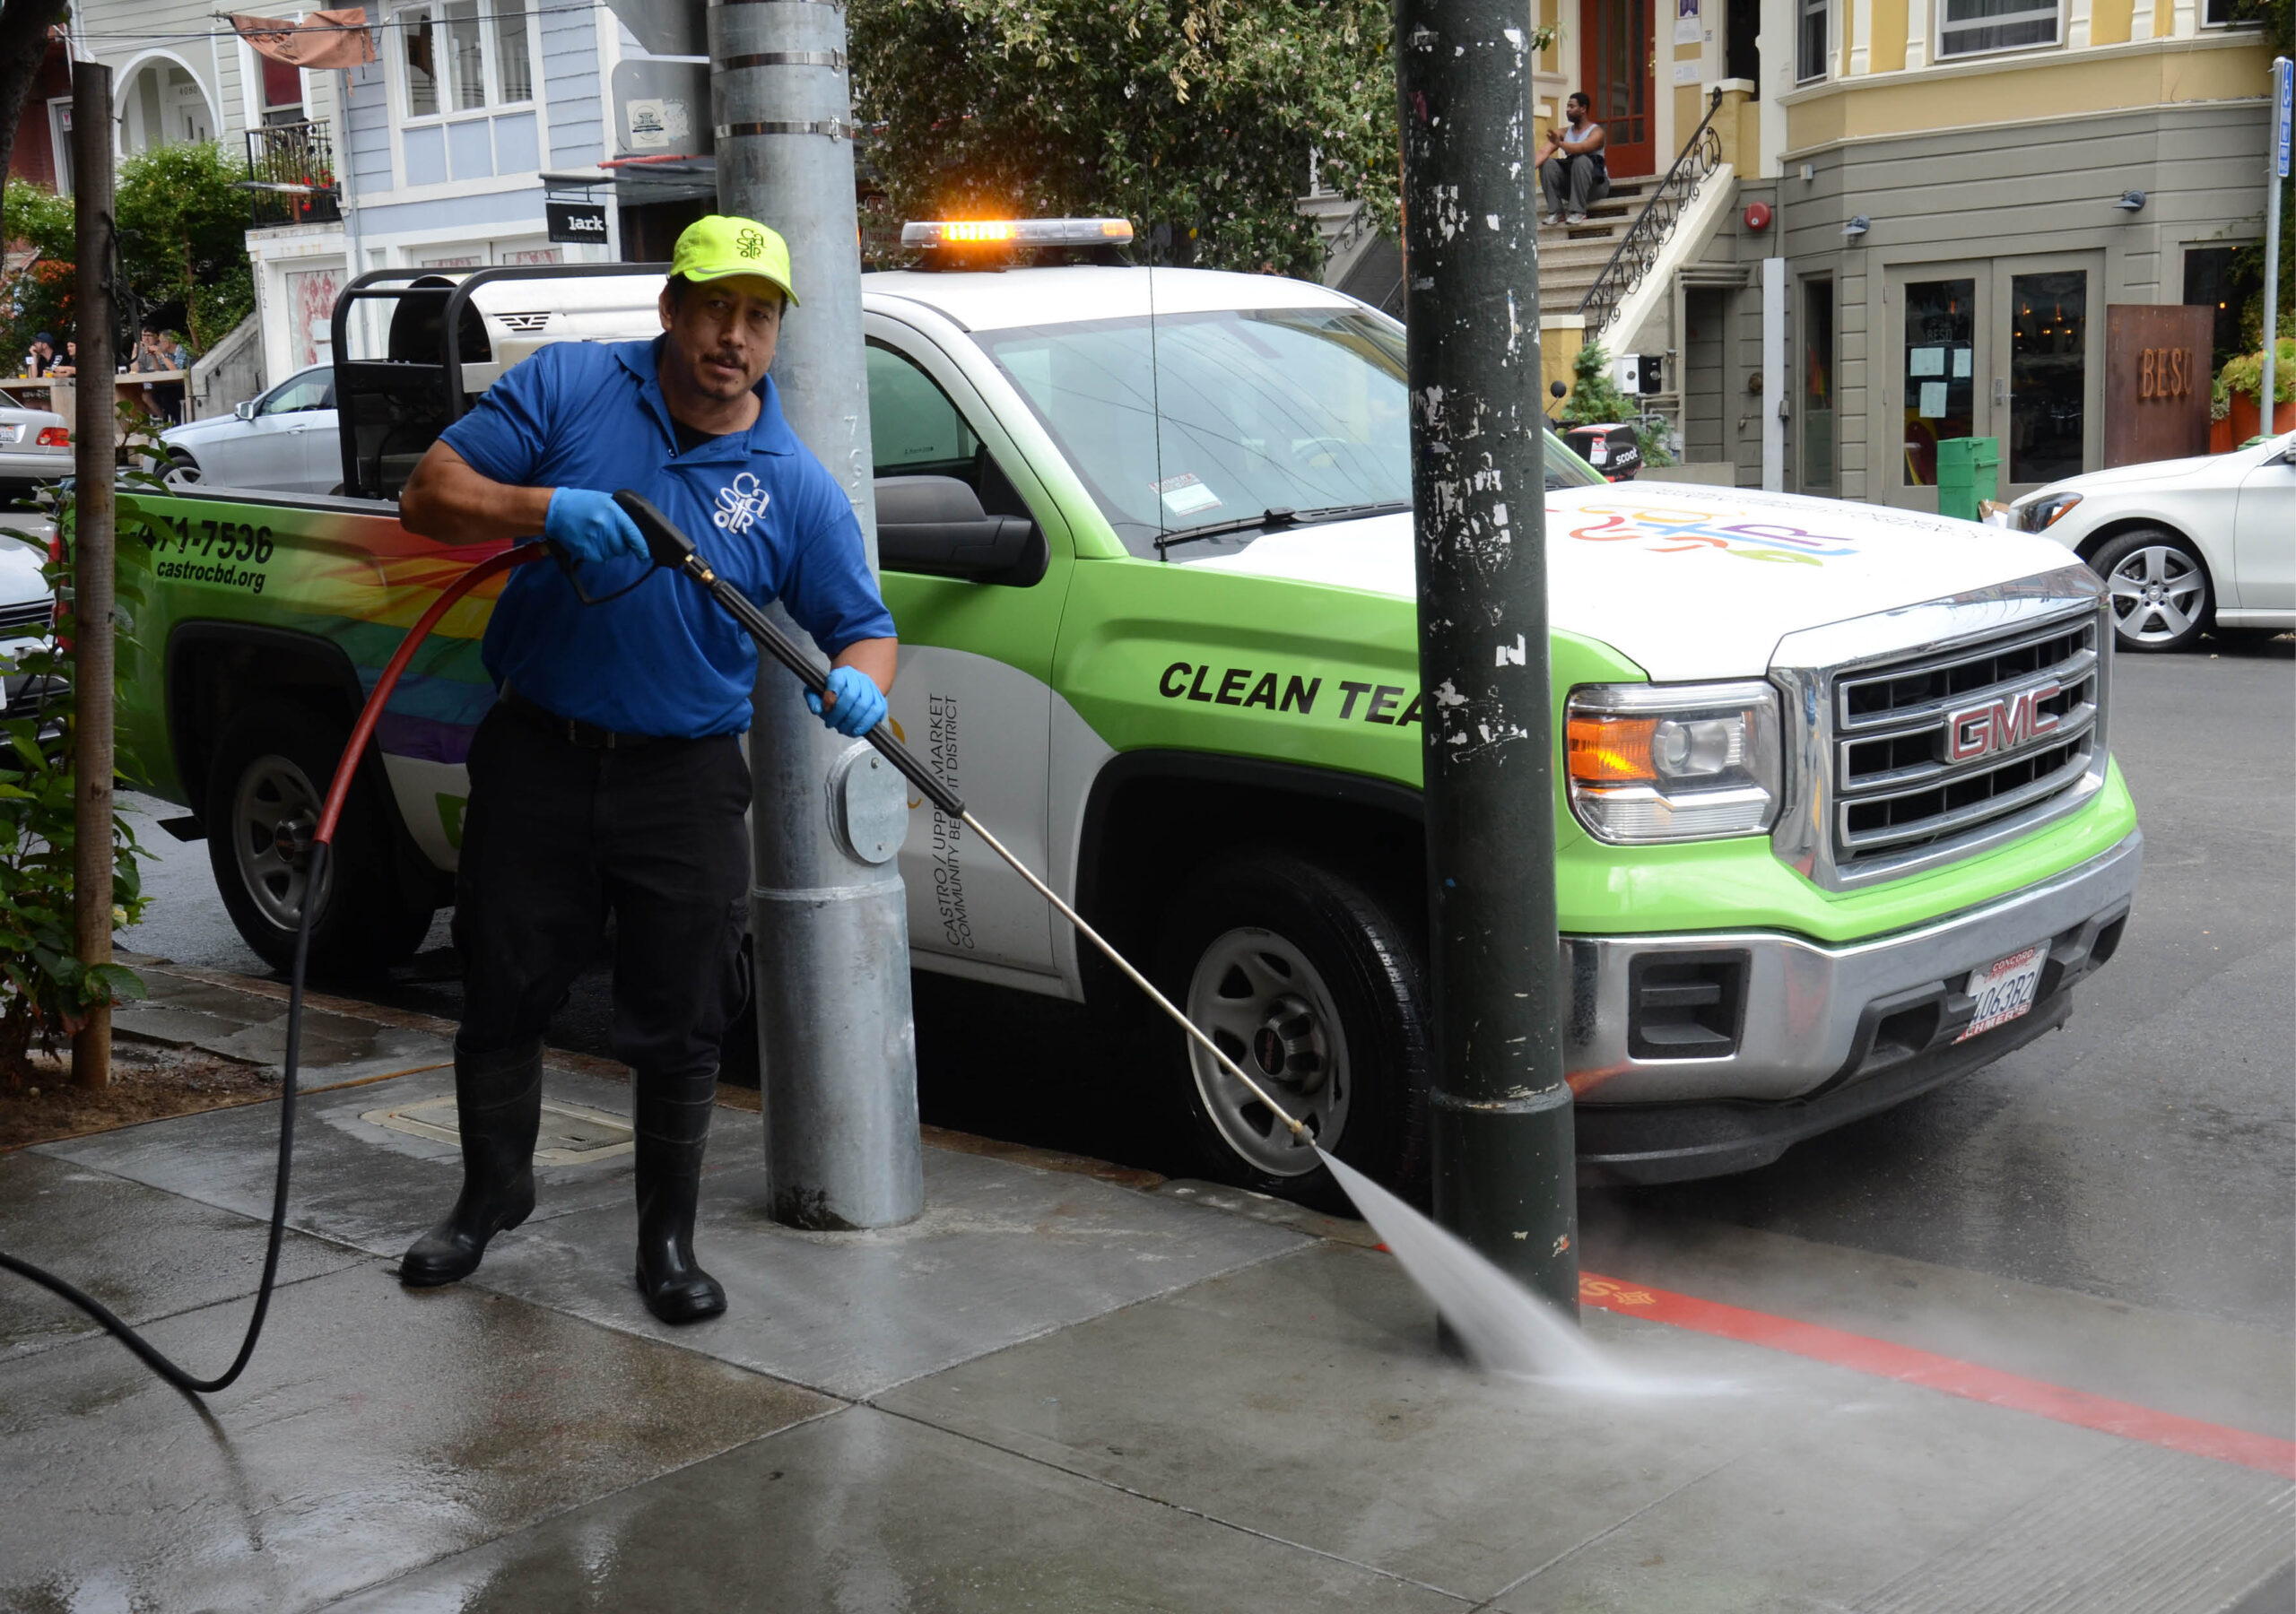 Castro sidewalk cleaning